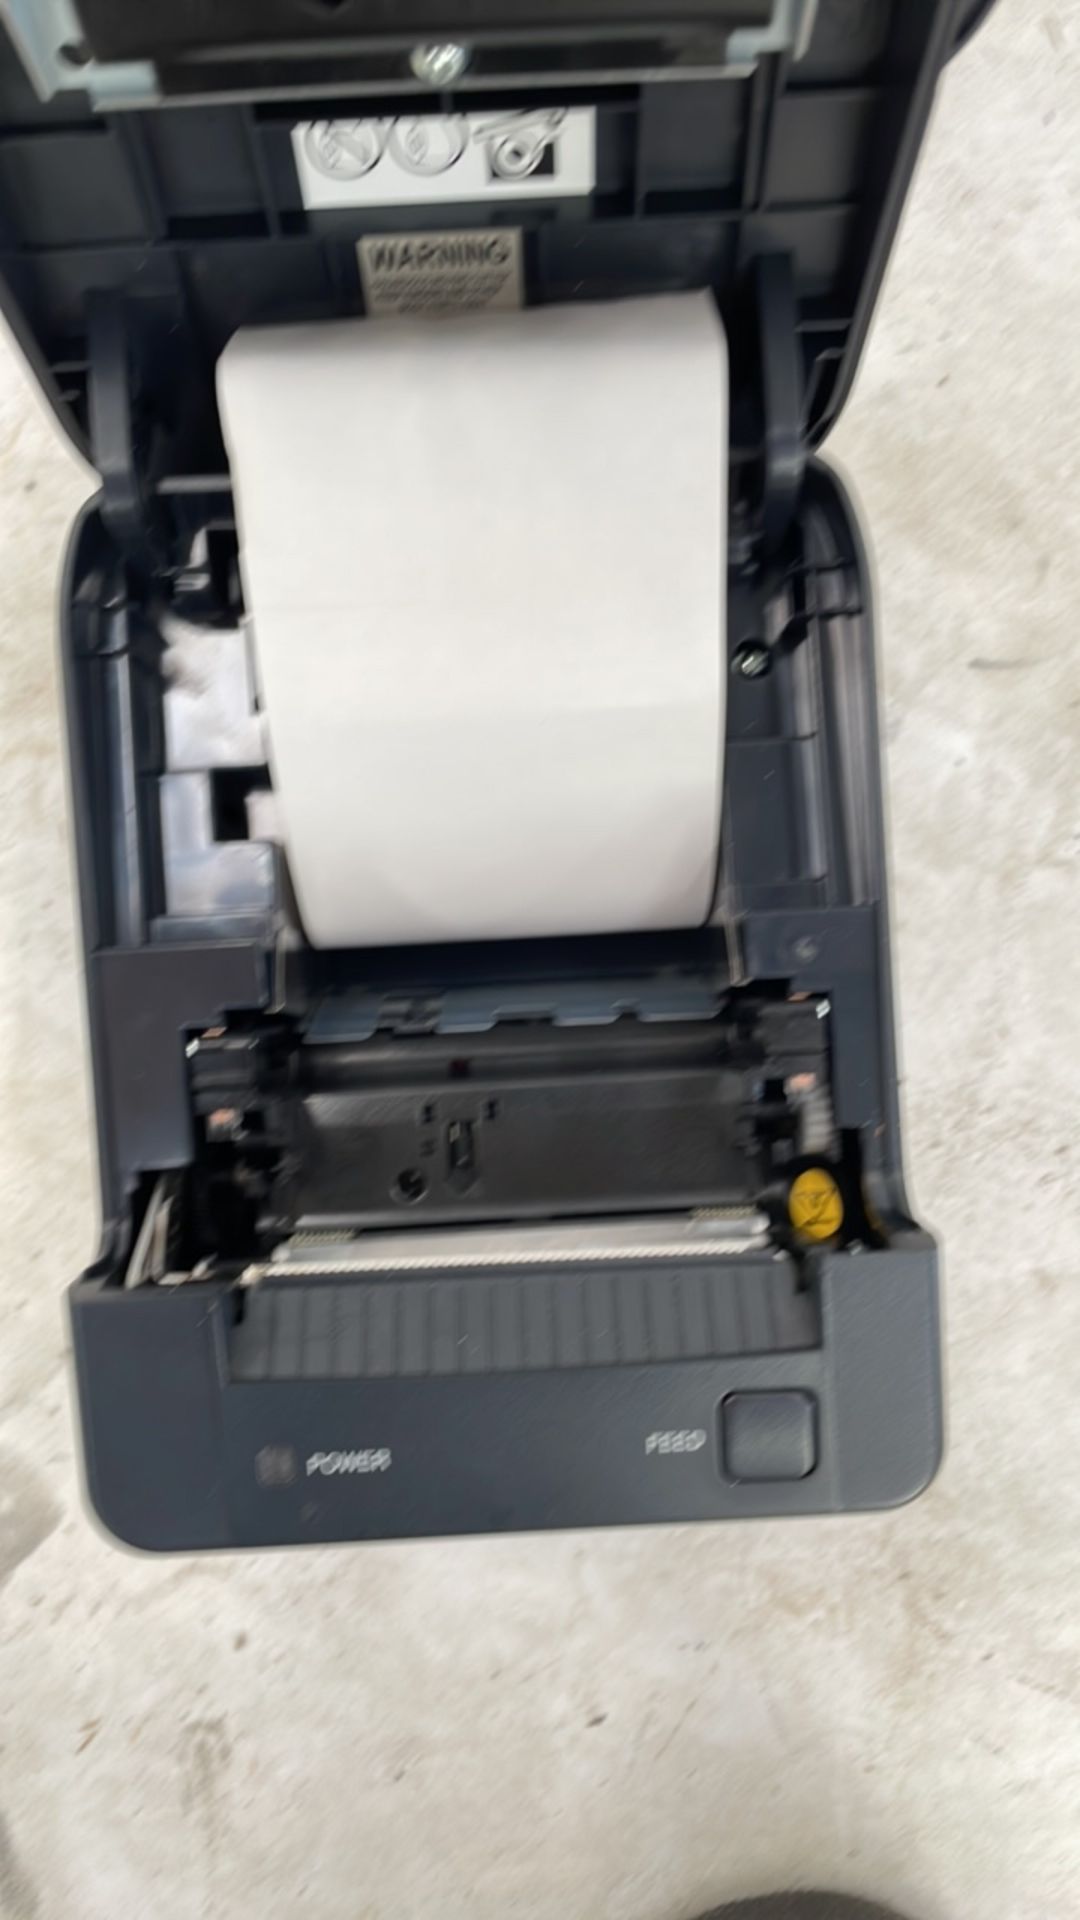 Toshiba Black receipt printer - Image 3 of 3